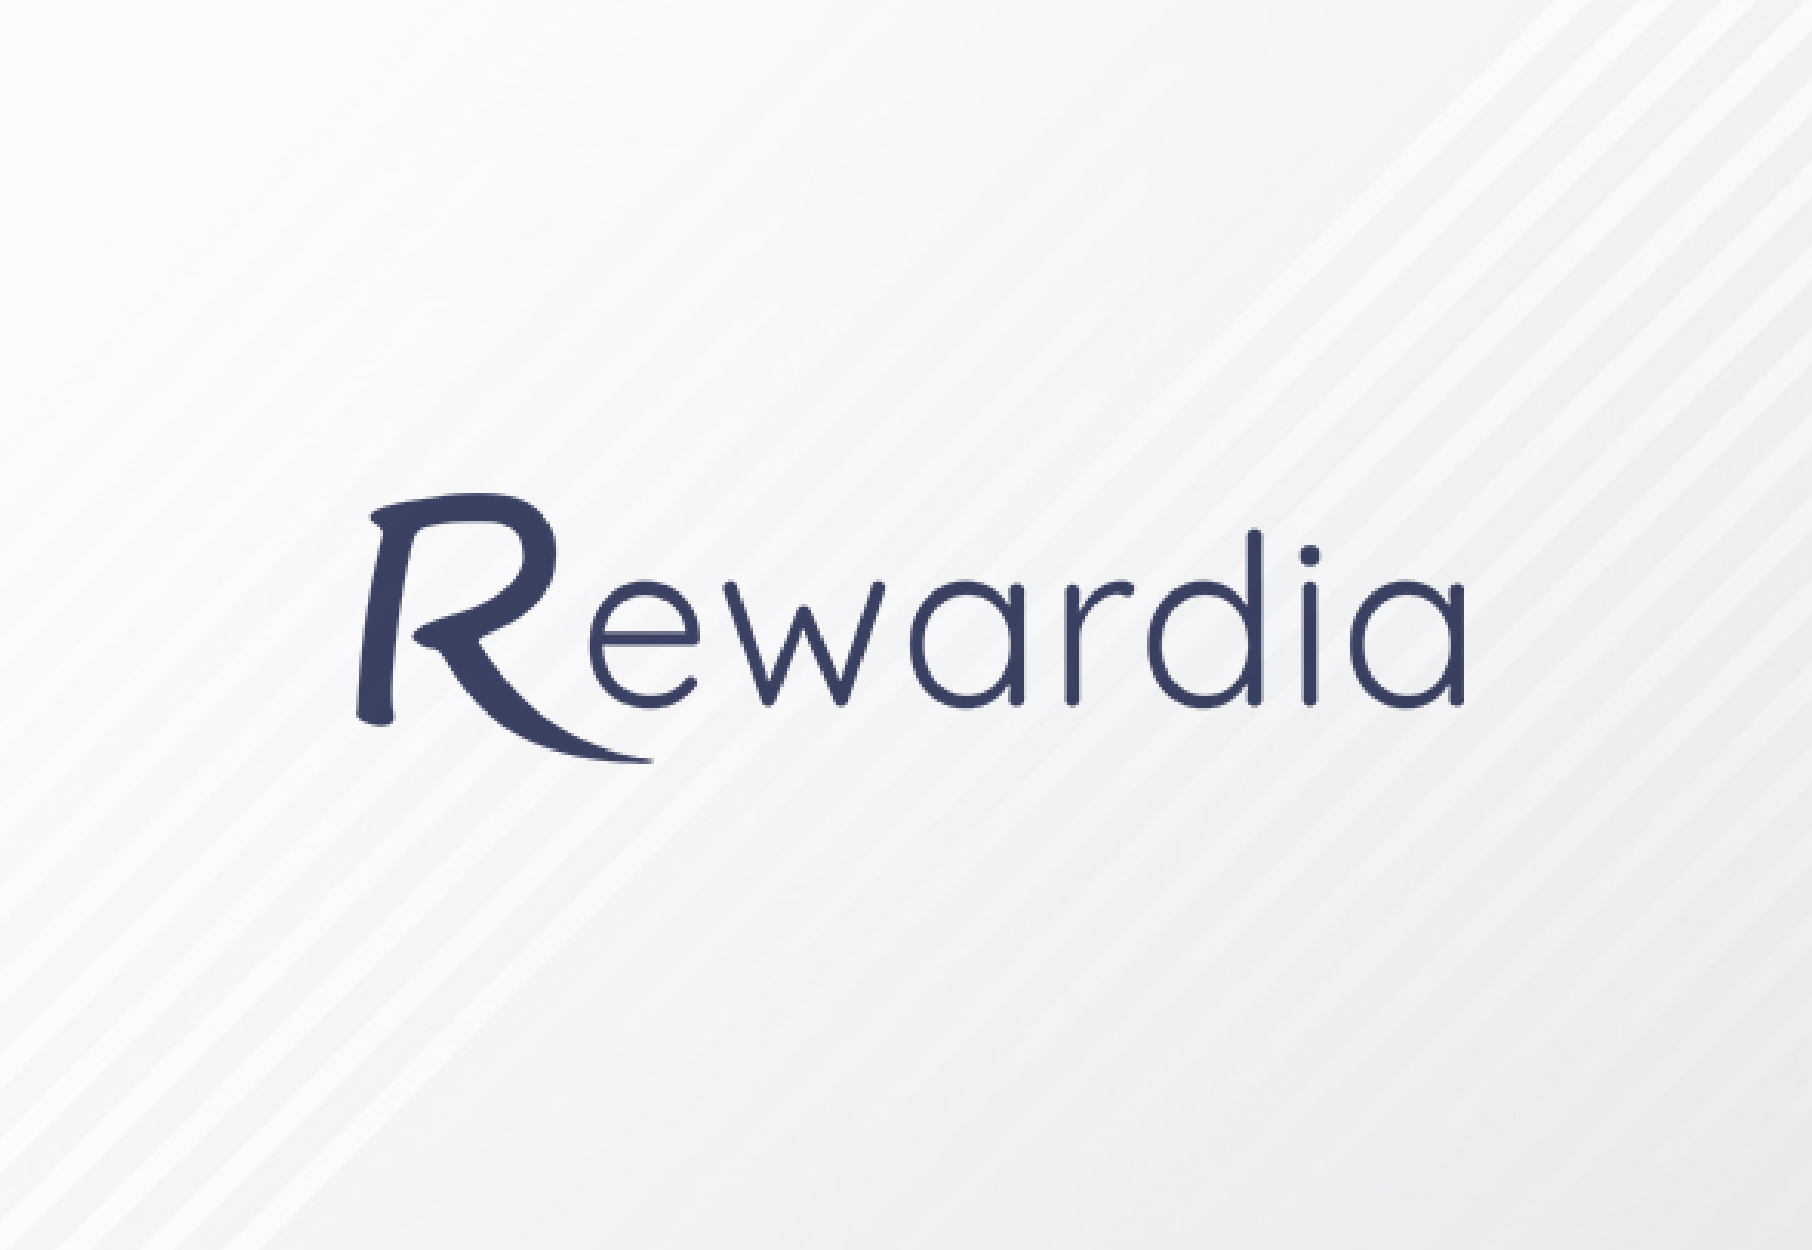 Rewardia Review - Is It A Scam?